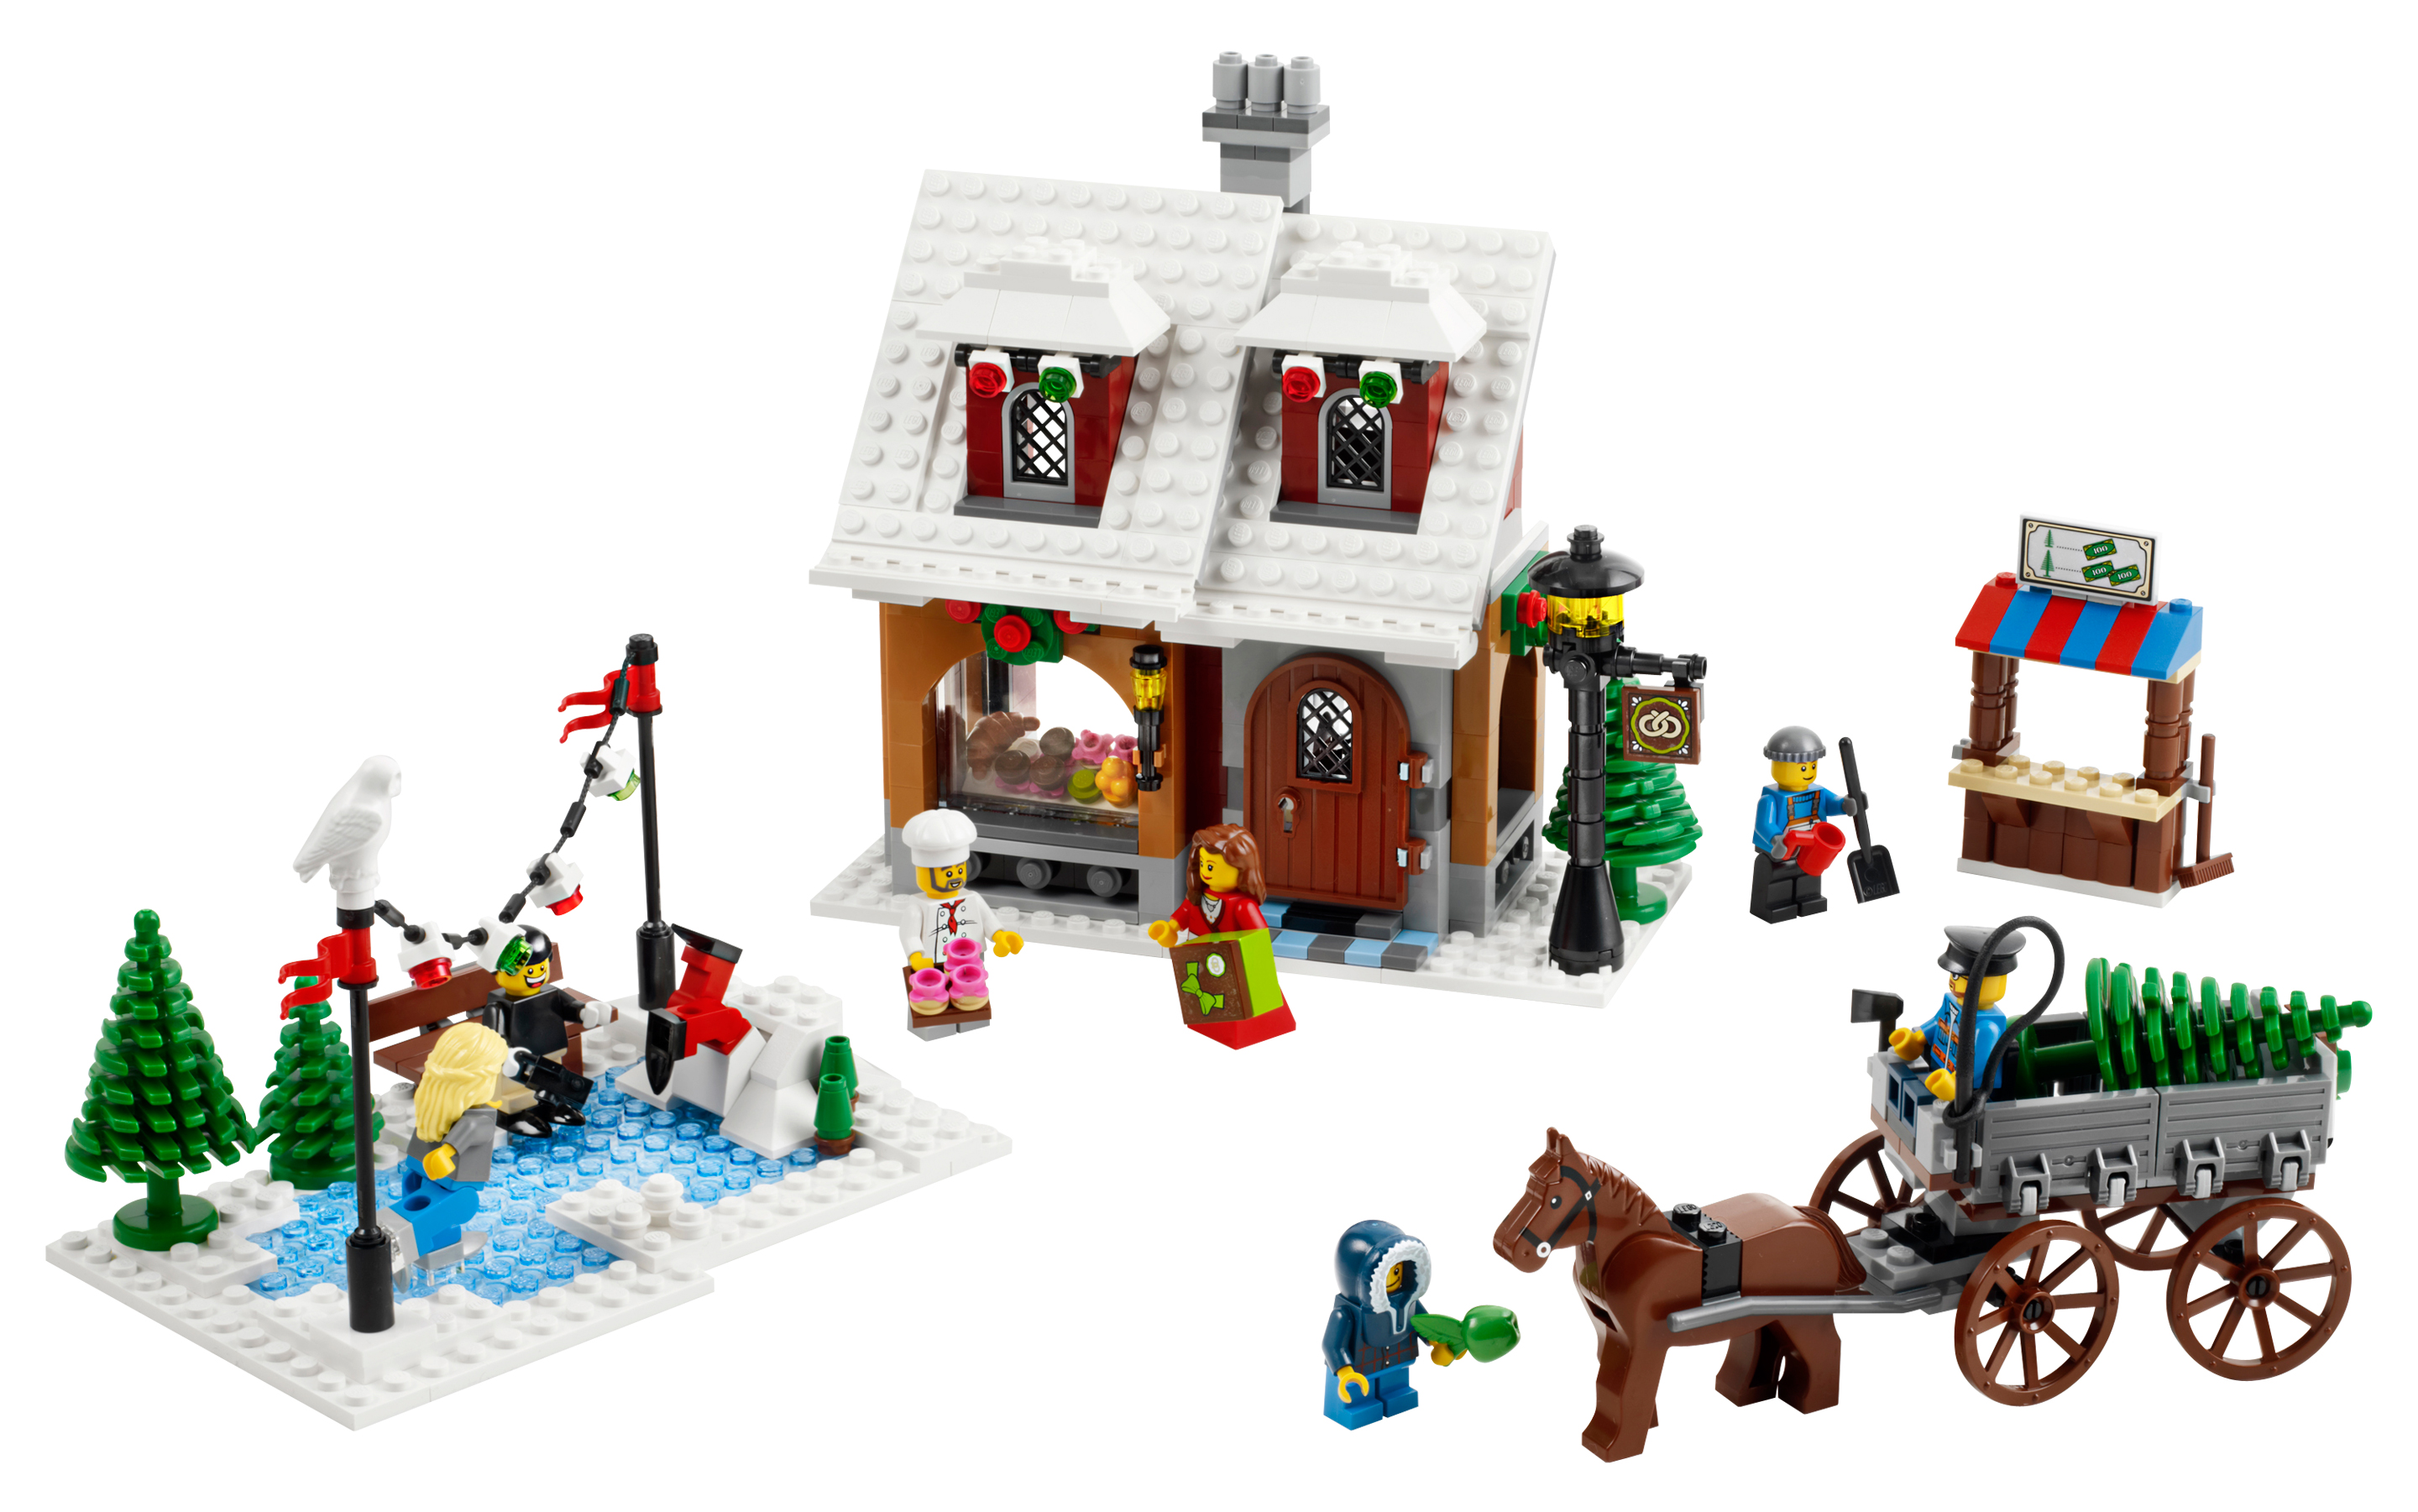 Lego Holiday Mini Build Set - Little Christmas Xmas Tree (with Presents) 10245